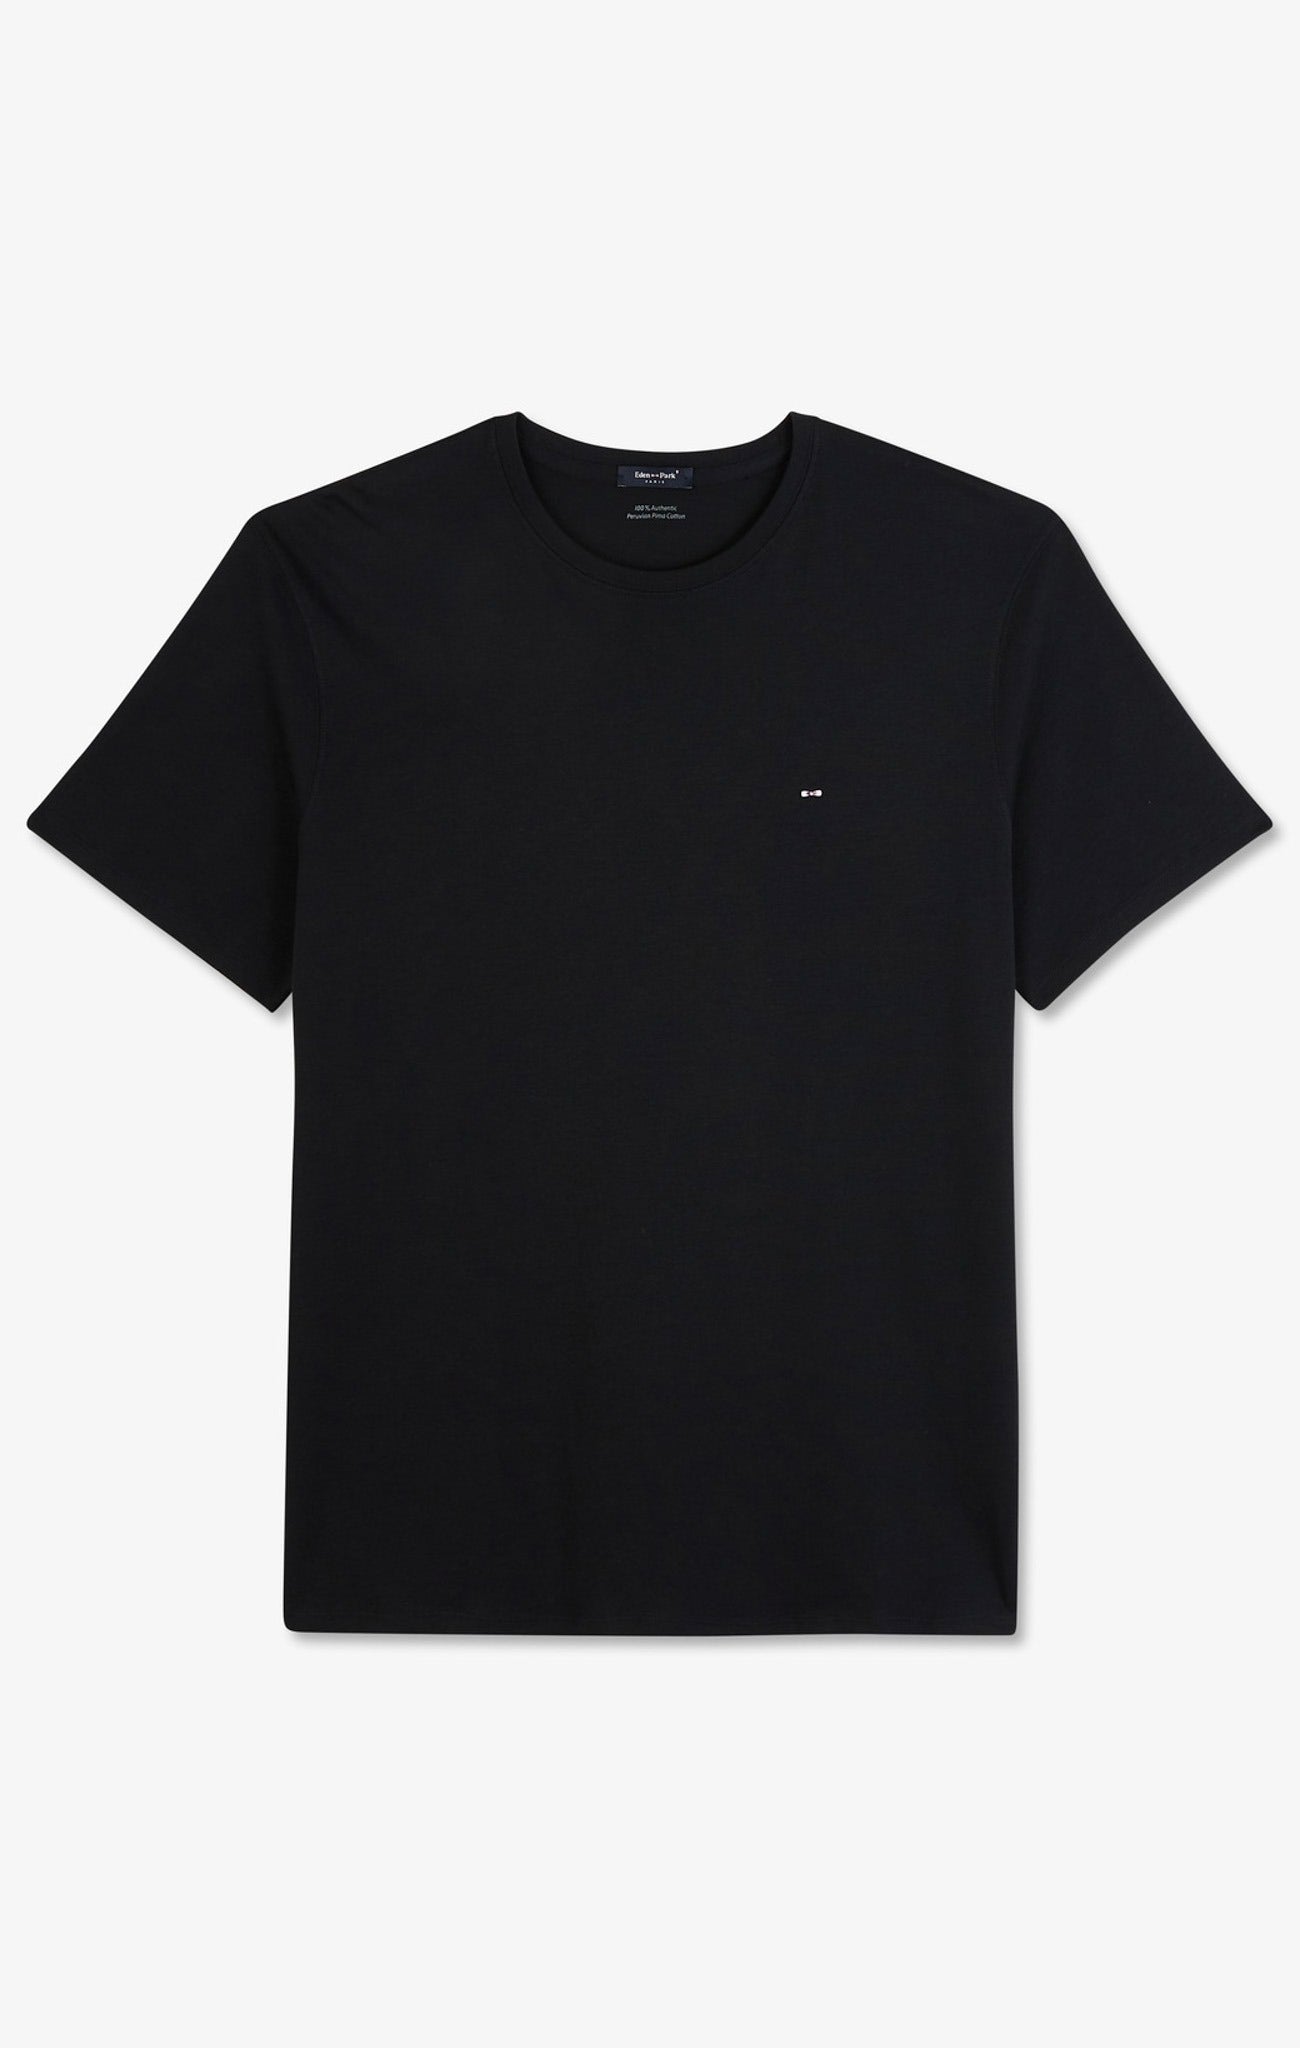 Crew neck black pima cotton t-shirt - Image 2